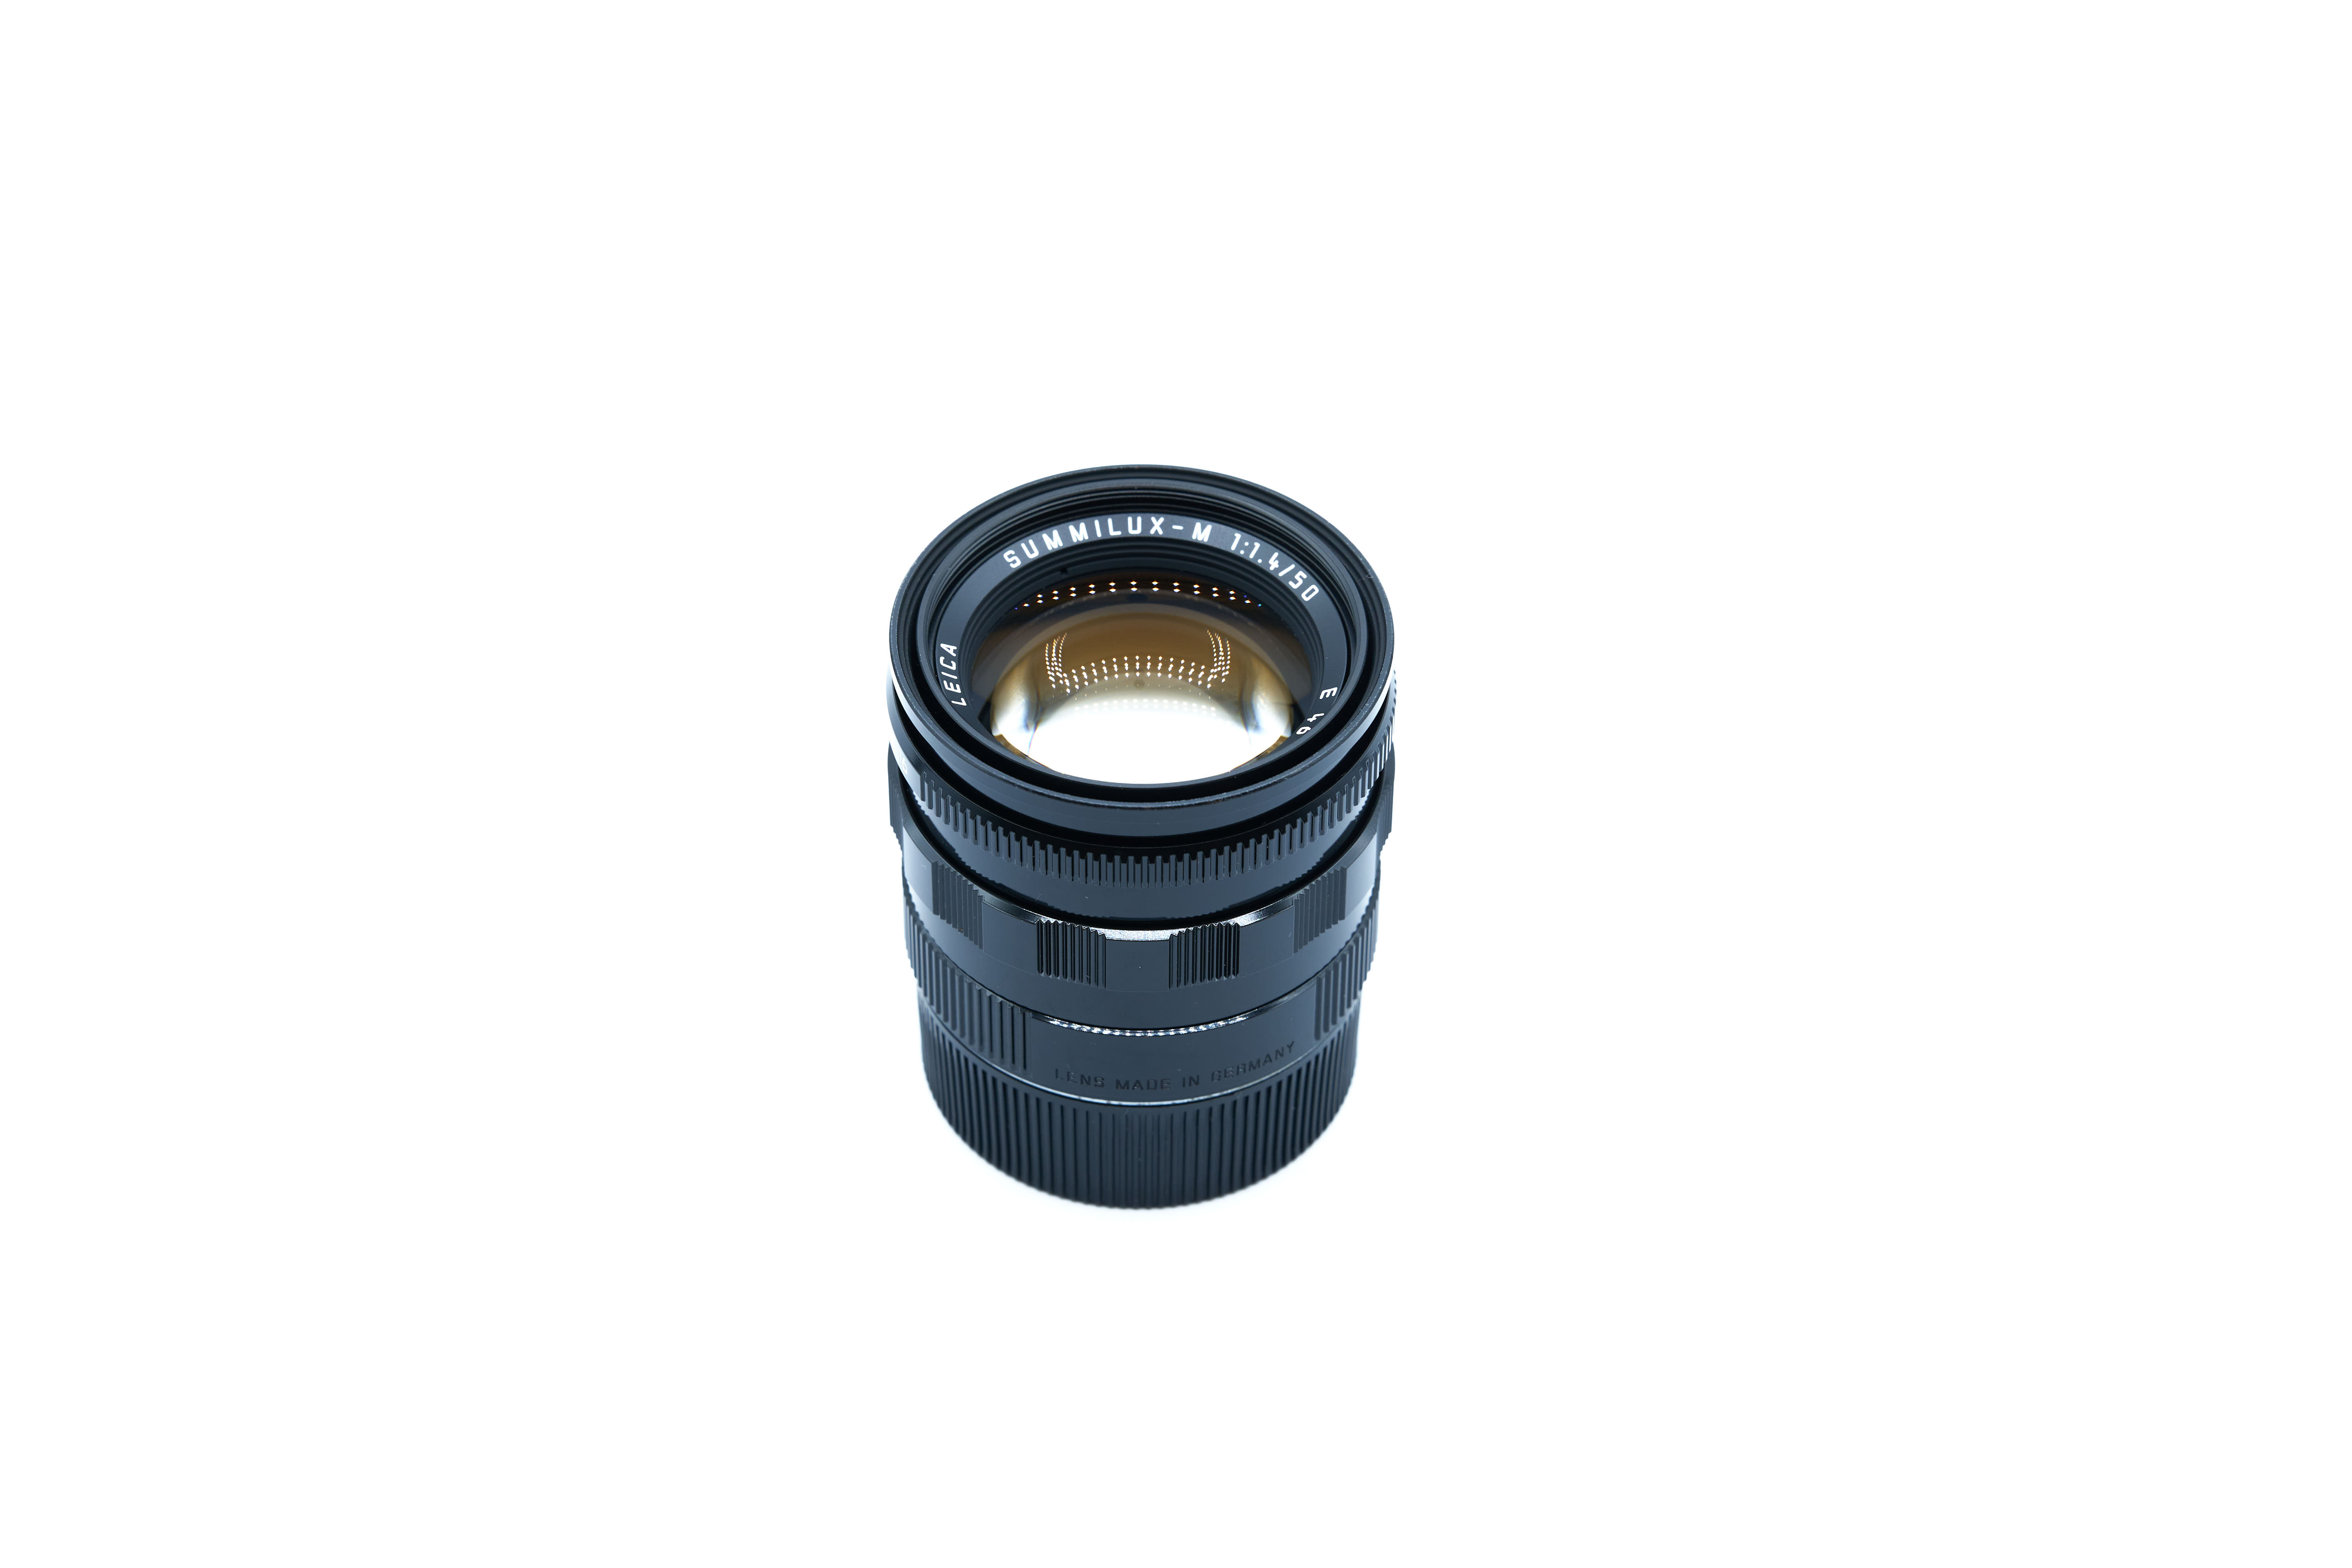 Leica M6 TTL Millennium Edition with Summilux-M 50mm f1.4 Black Paint